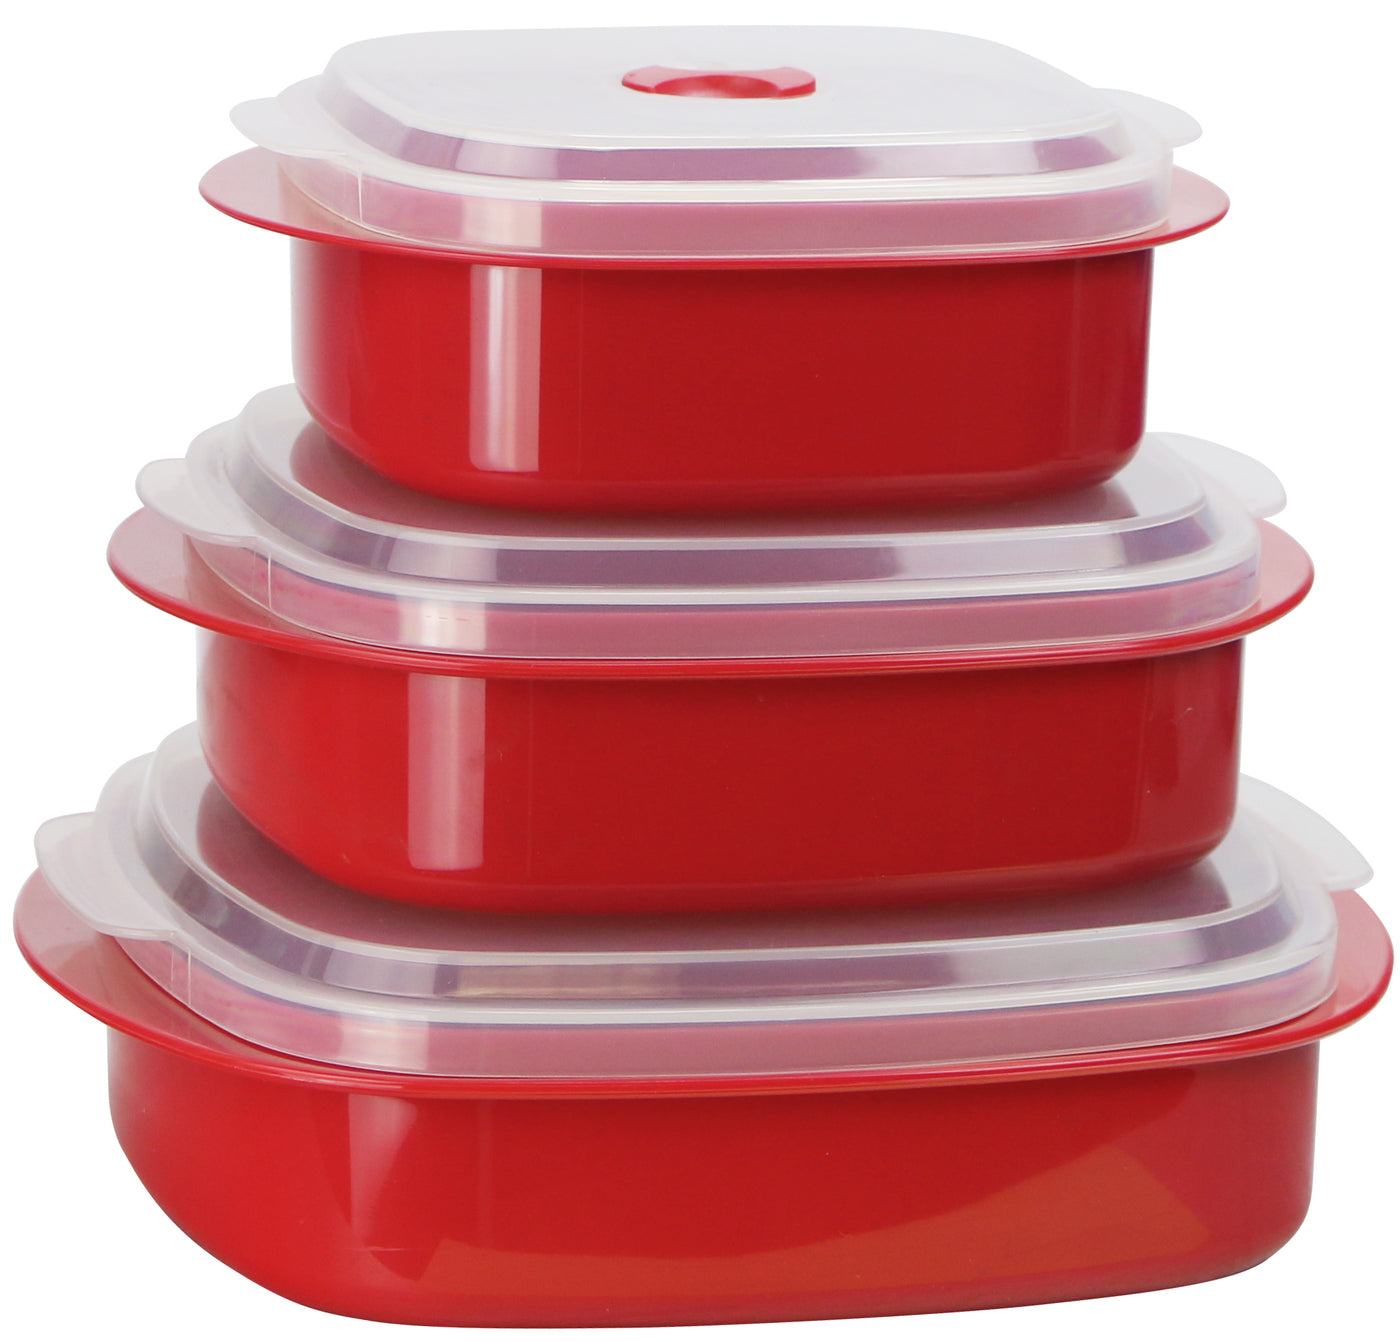 Reston Lloyd Purple - Microwave Cookware-Storage Set